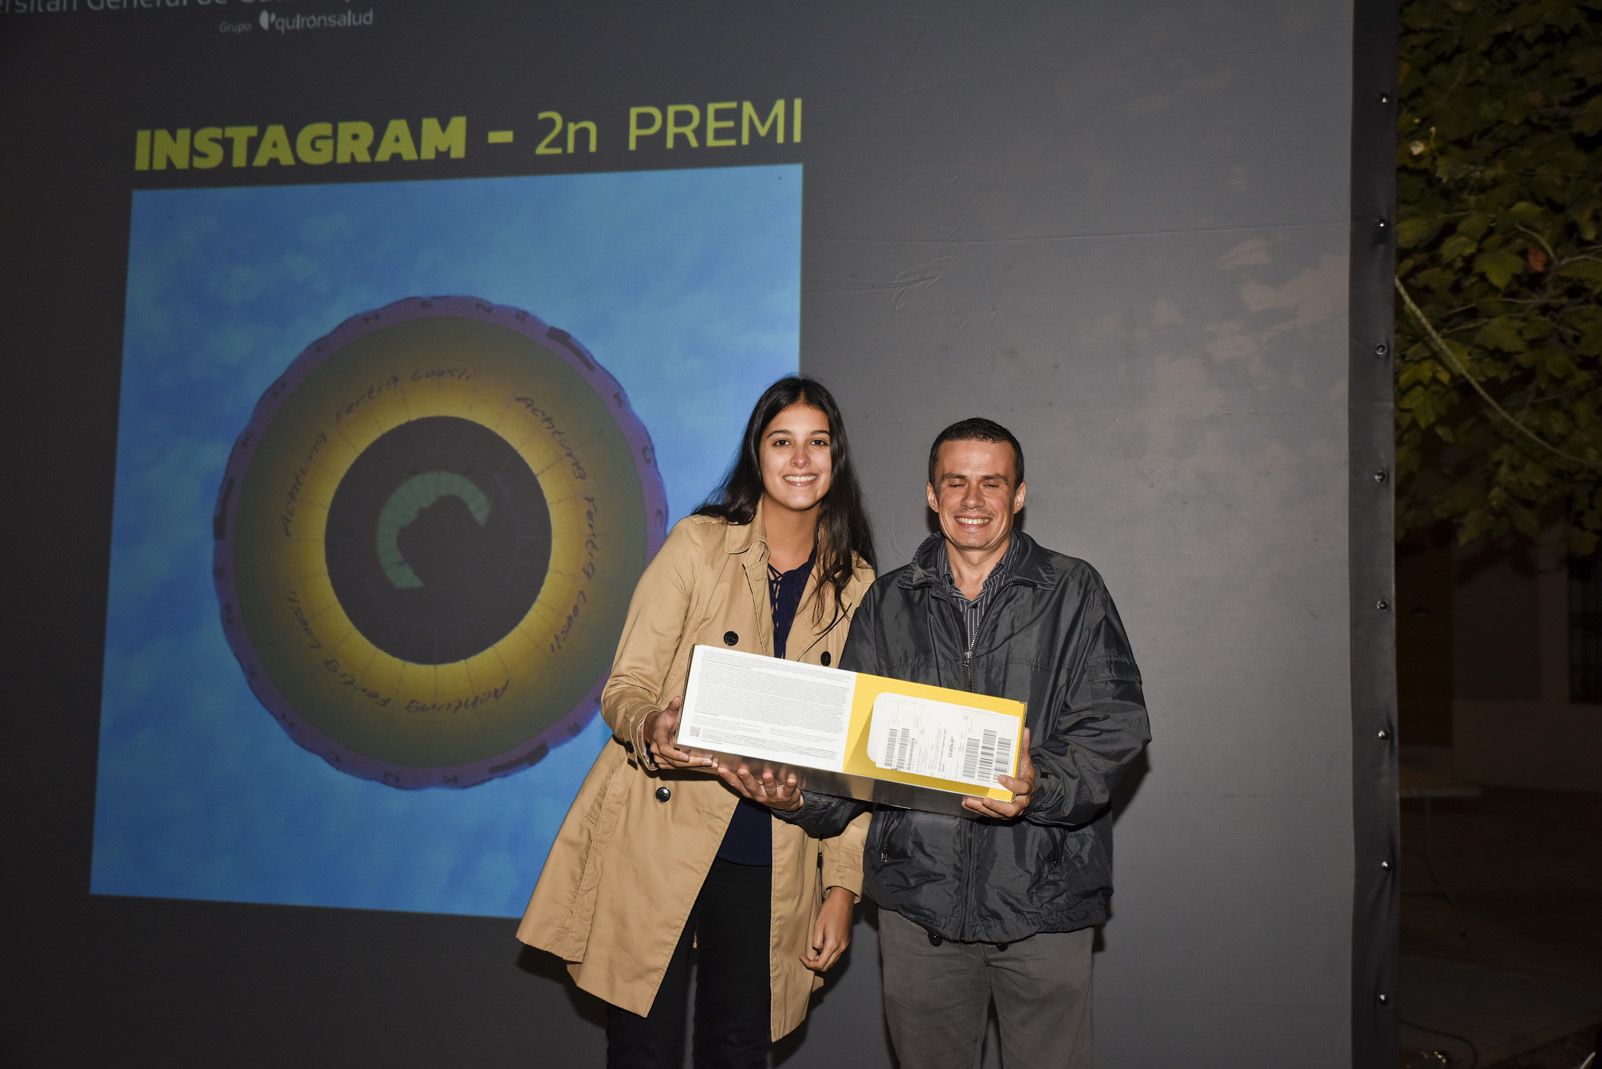 2on premi ‘Instagram’ juanmariatorres - Globus caçat per sota a Igualada. Foto: Bernat Millet.